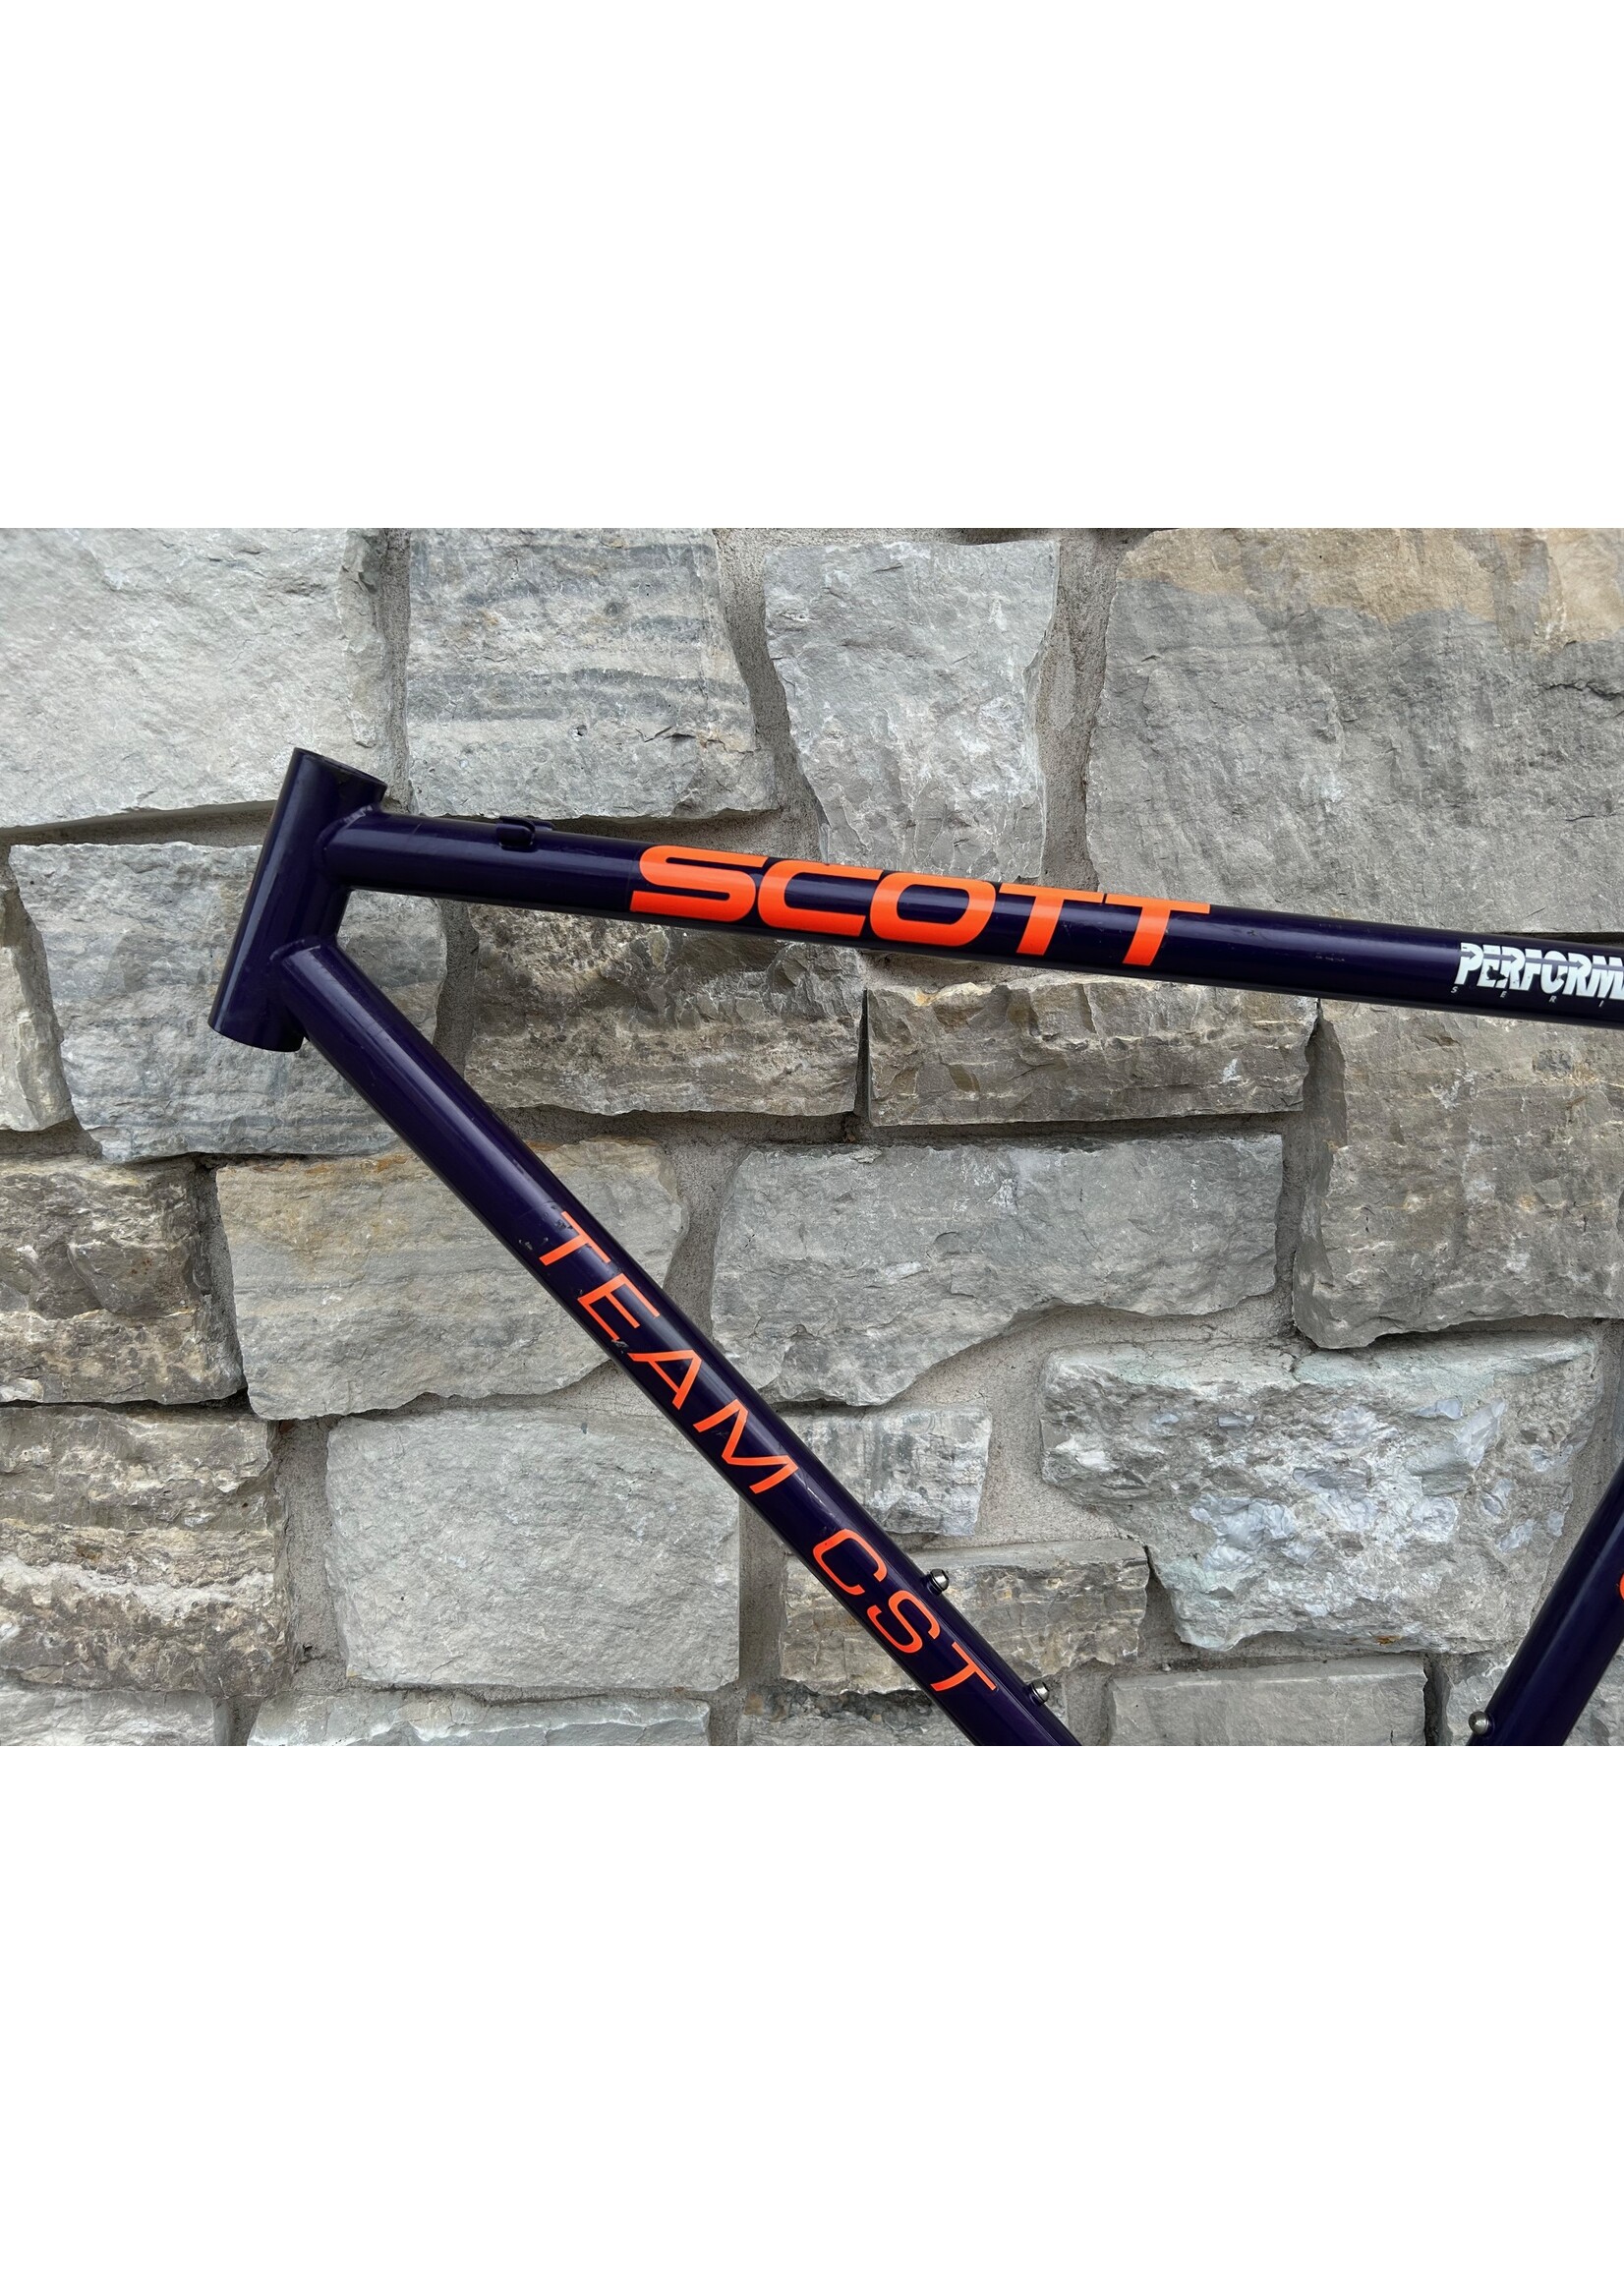 1992 19" Scott Team CST Frame